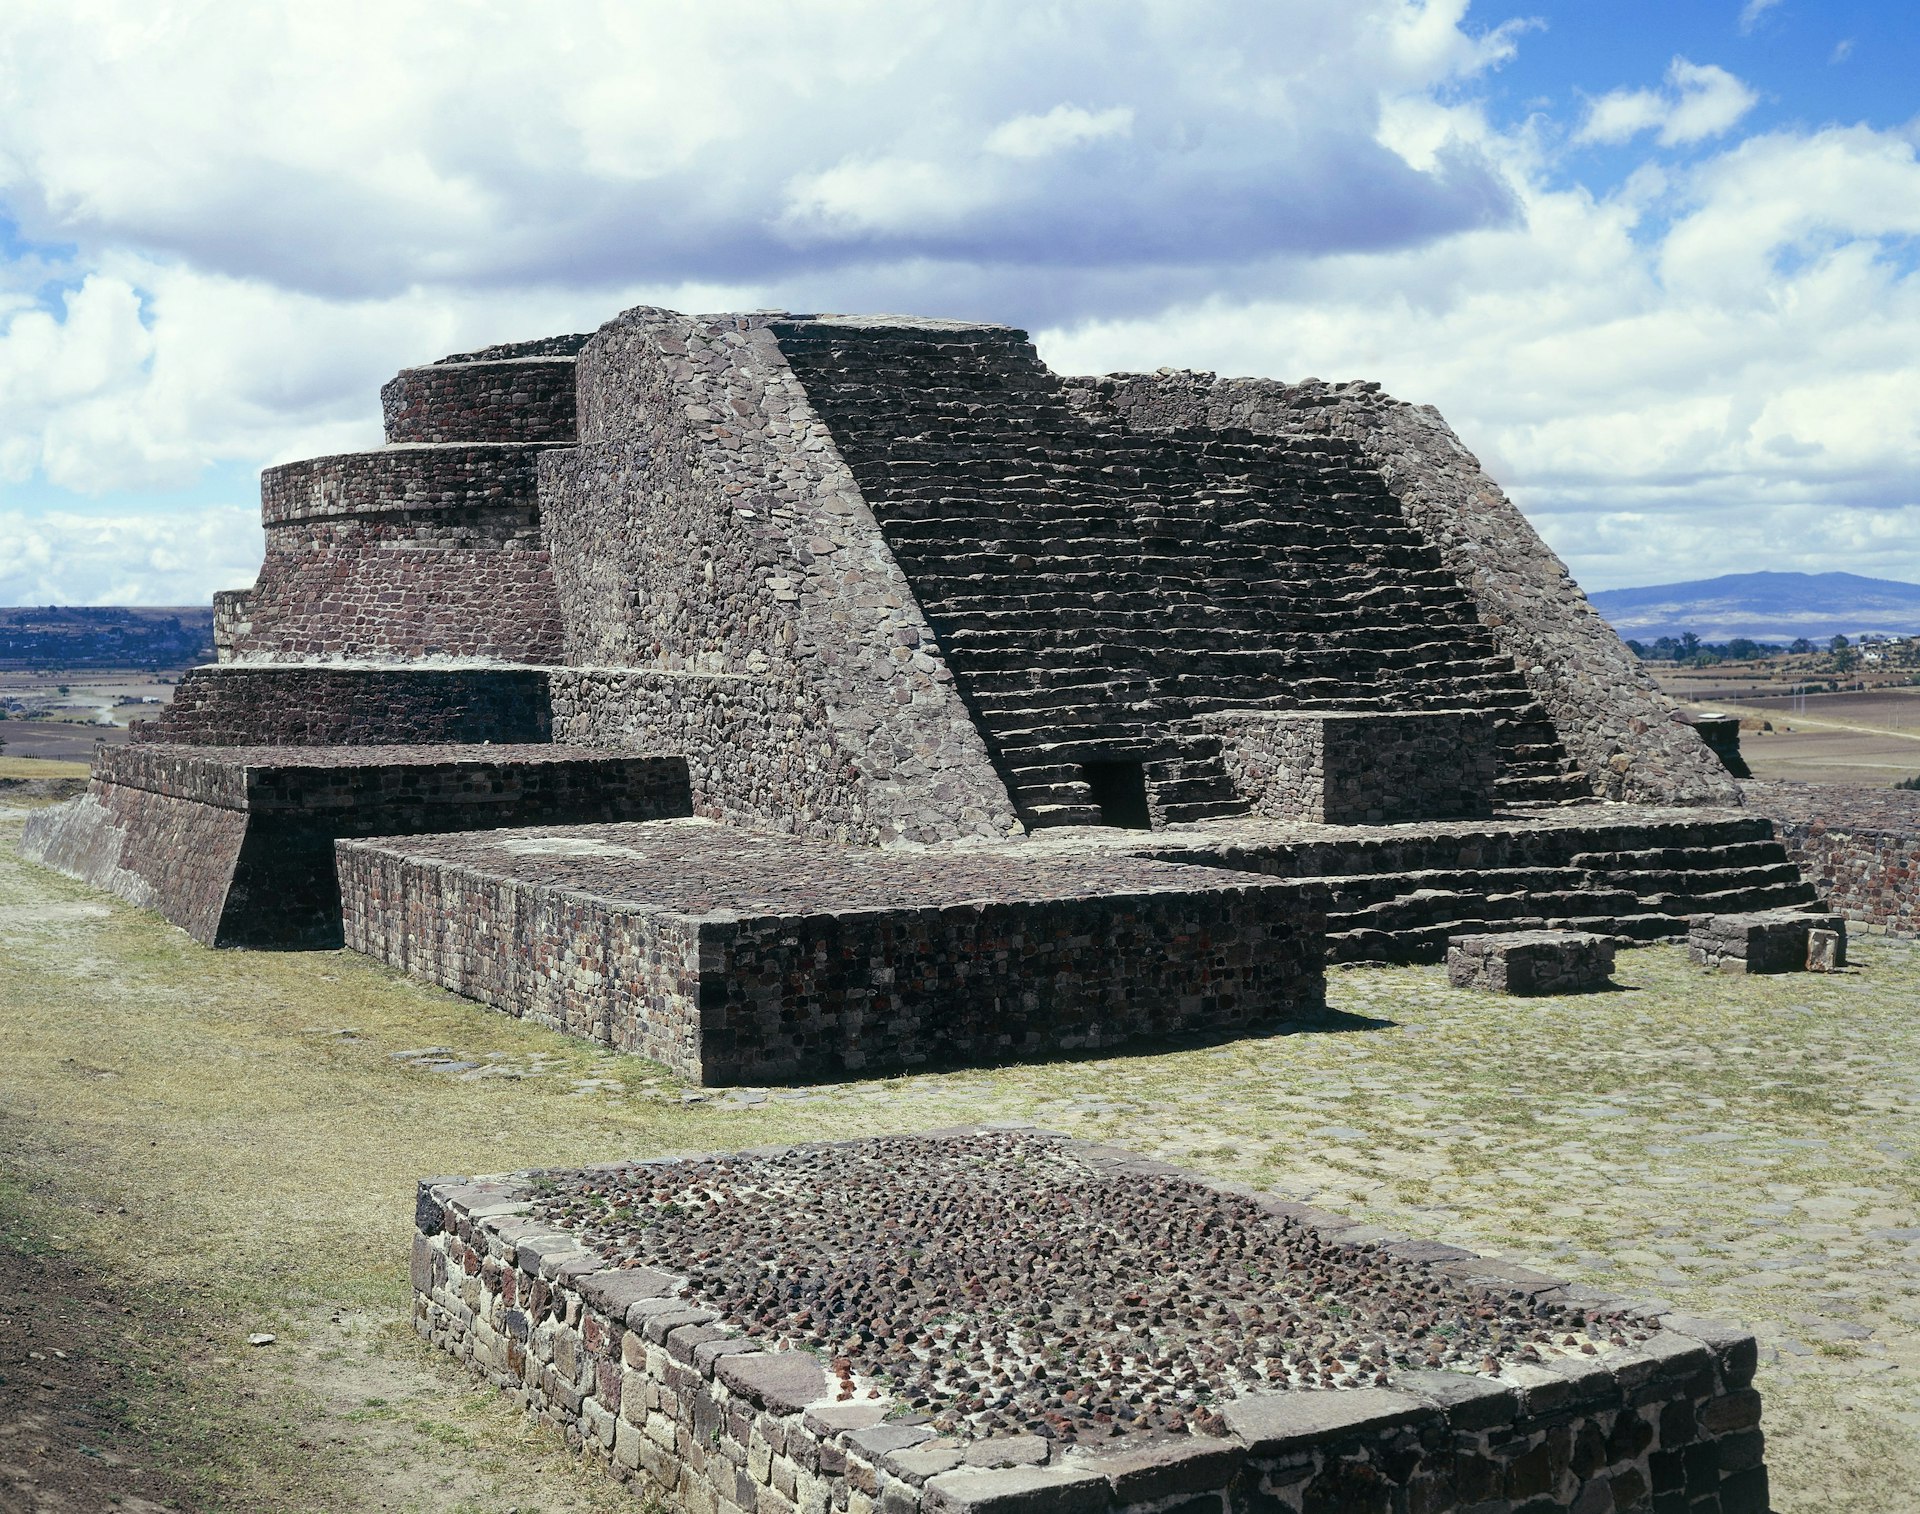 CIRCA 1900: Mexico - Aztec archaeological site of Calixtlahuaca. The Temple of Quetzalcoatl, 14th century.